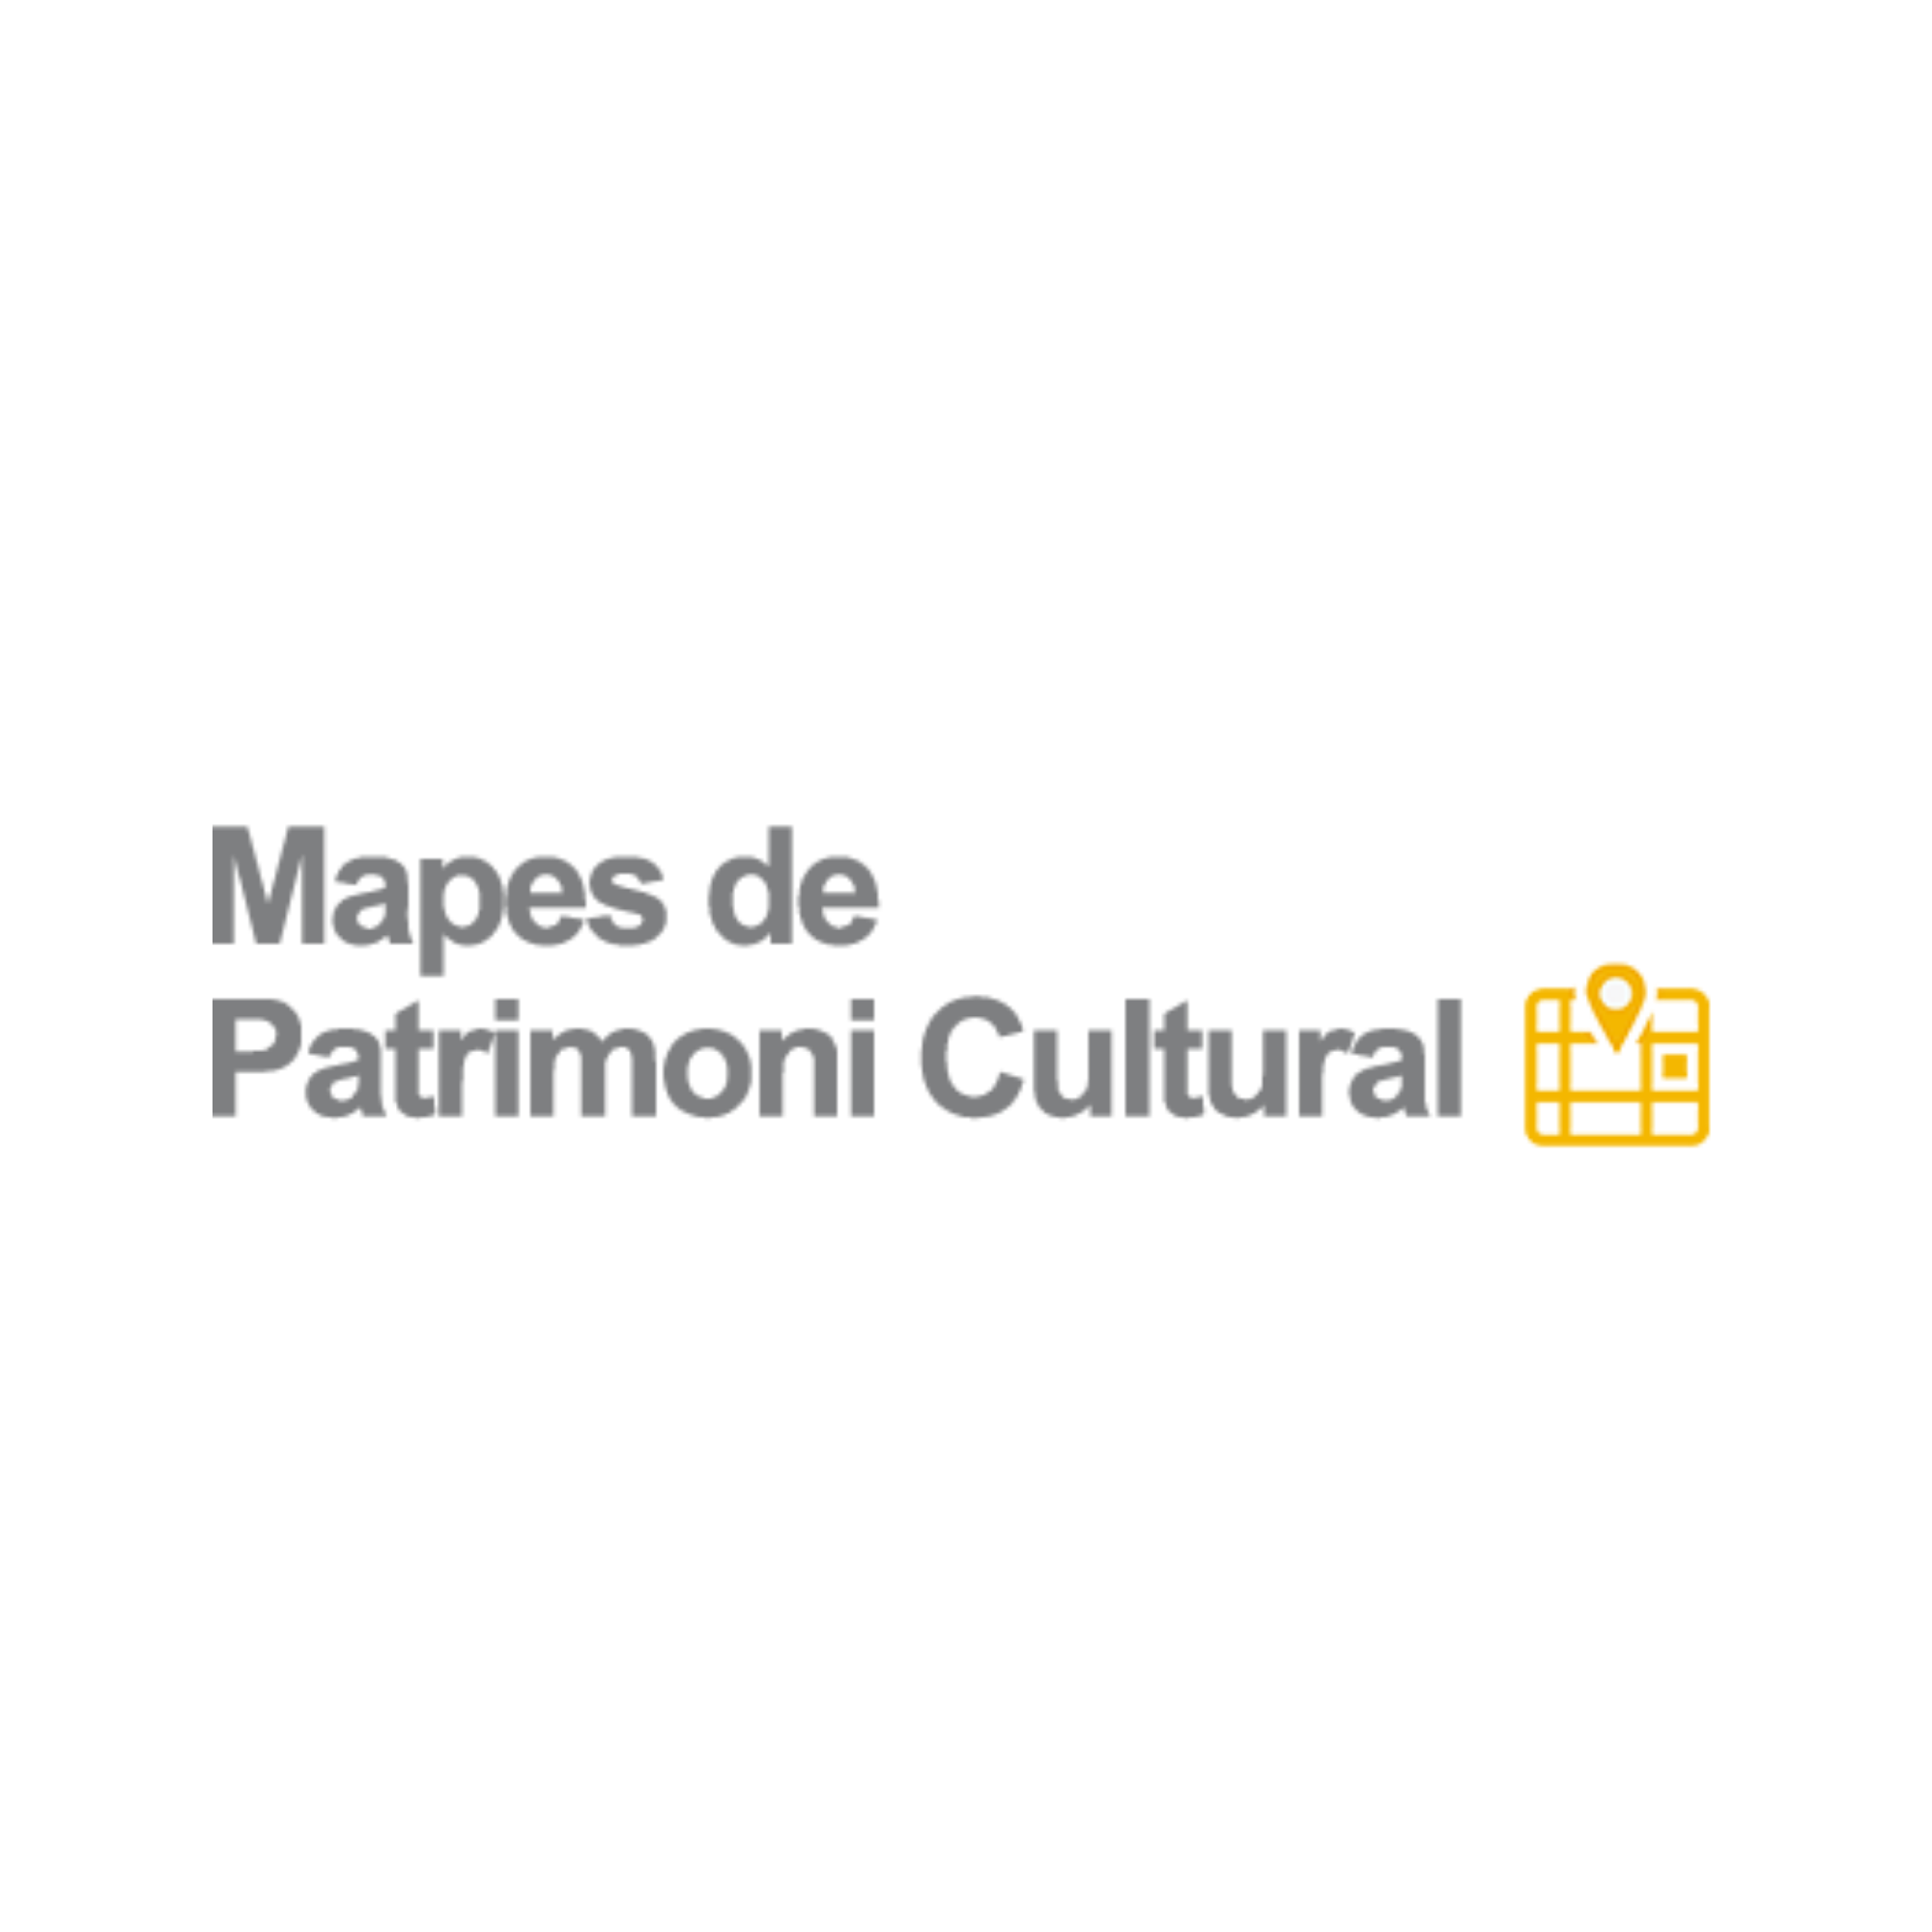 Mapes de Patrimoni Cultural